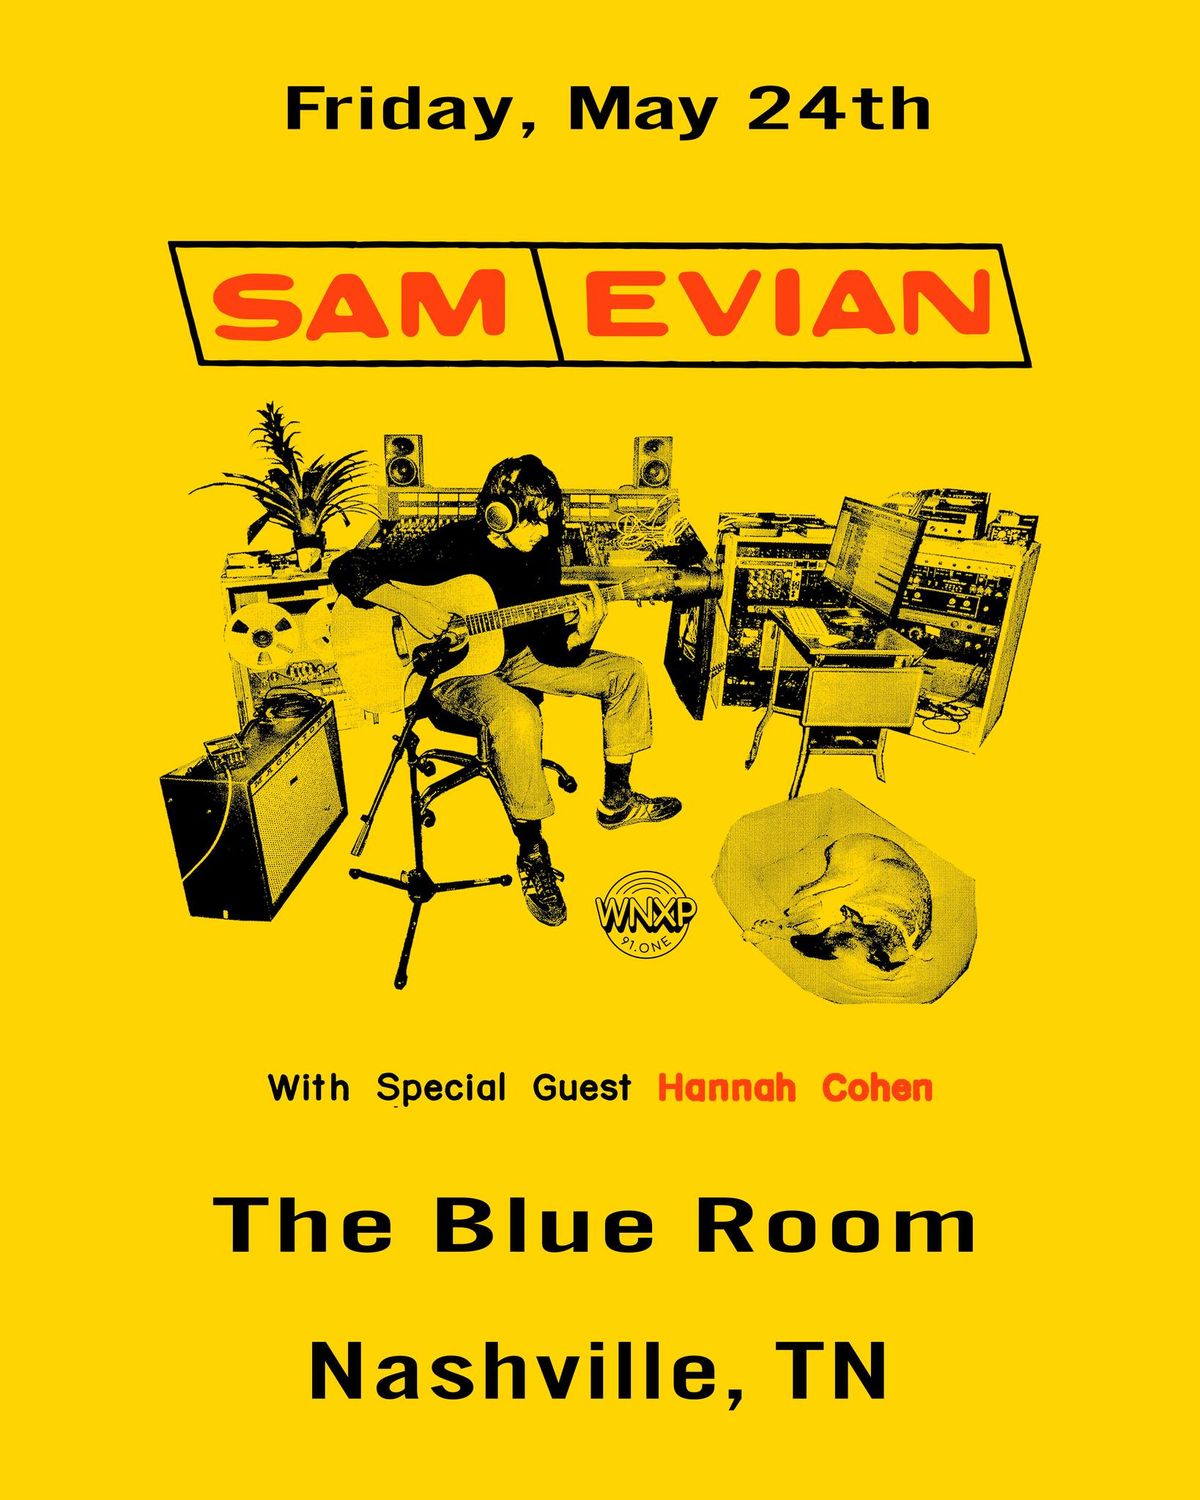 Sam Evian Live at The Blue Room